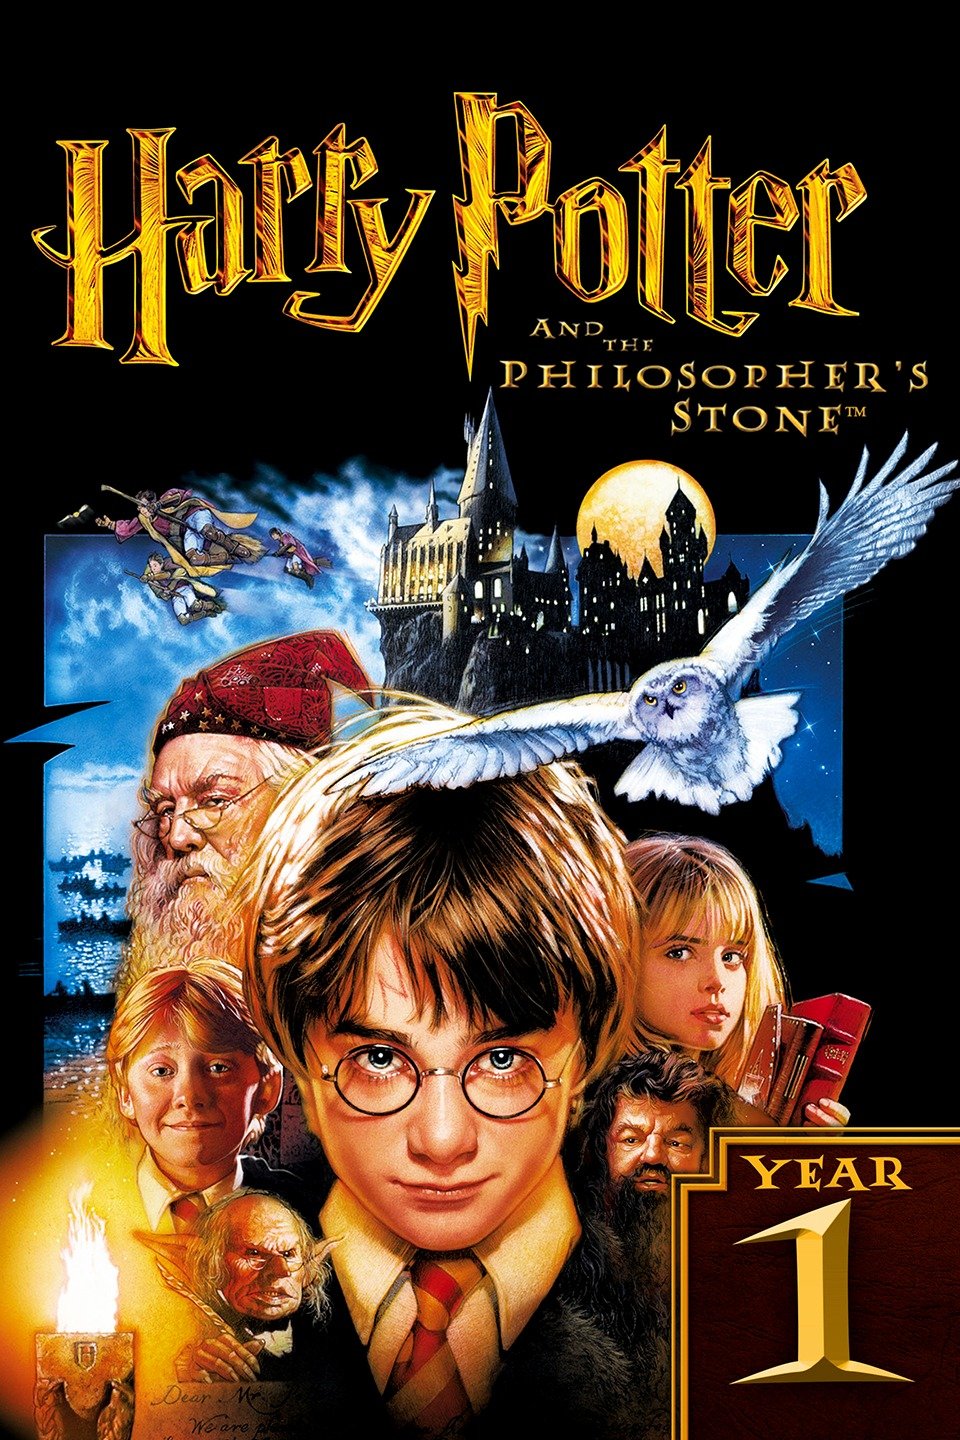 Harry potter watch online now free hd